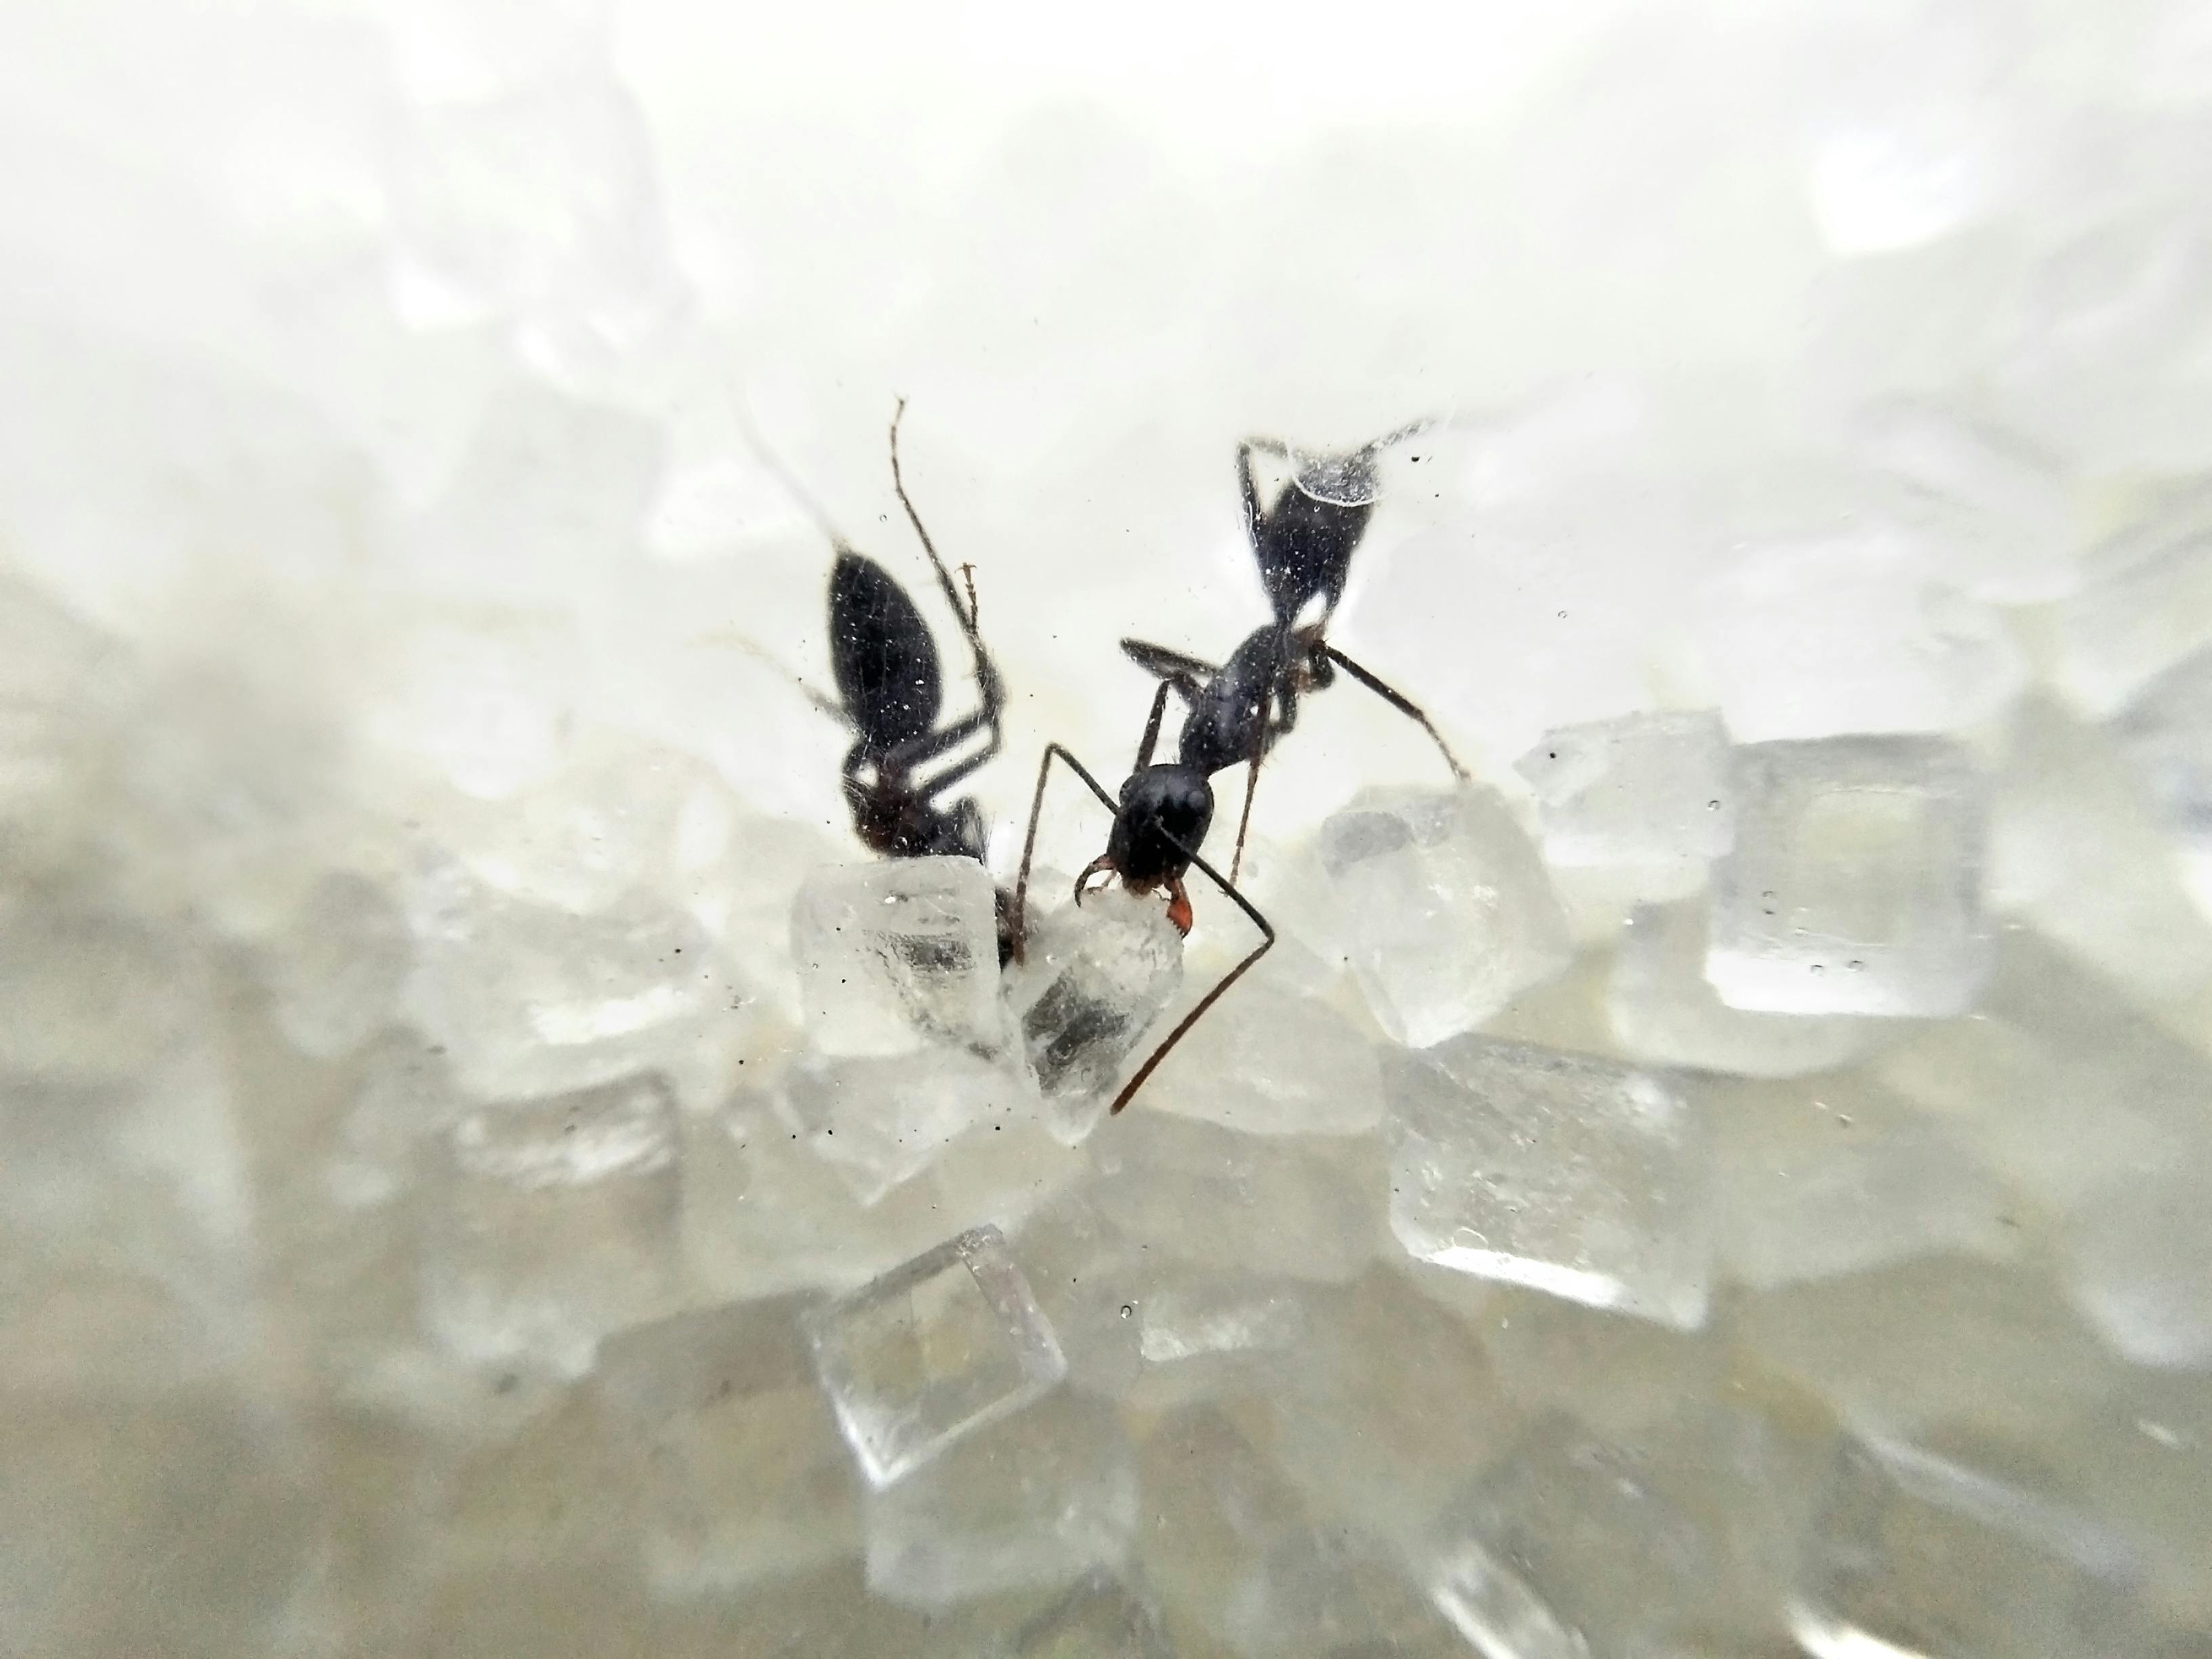 Free stock photo of Ants eating sugar